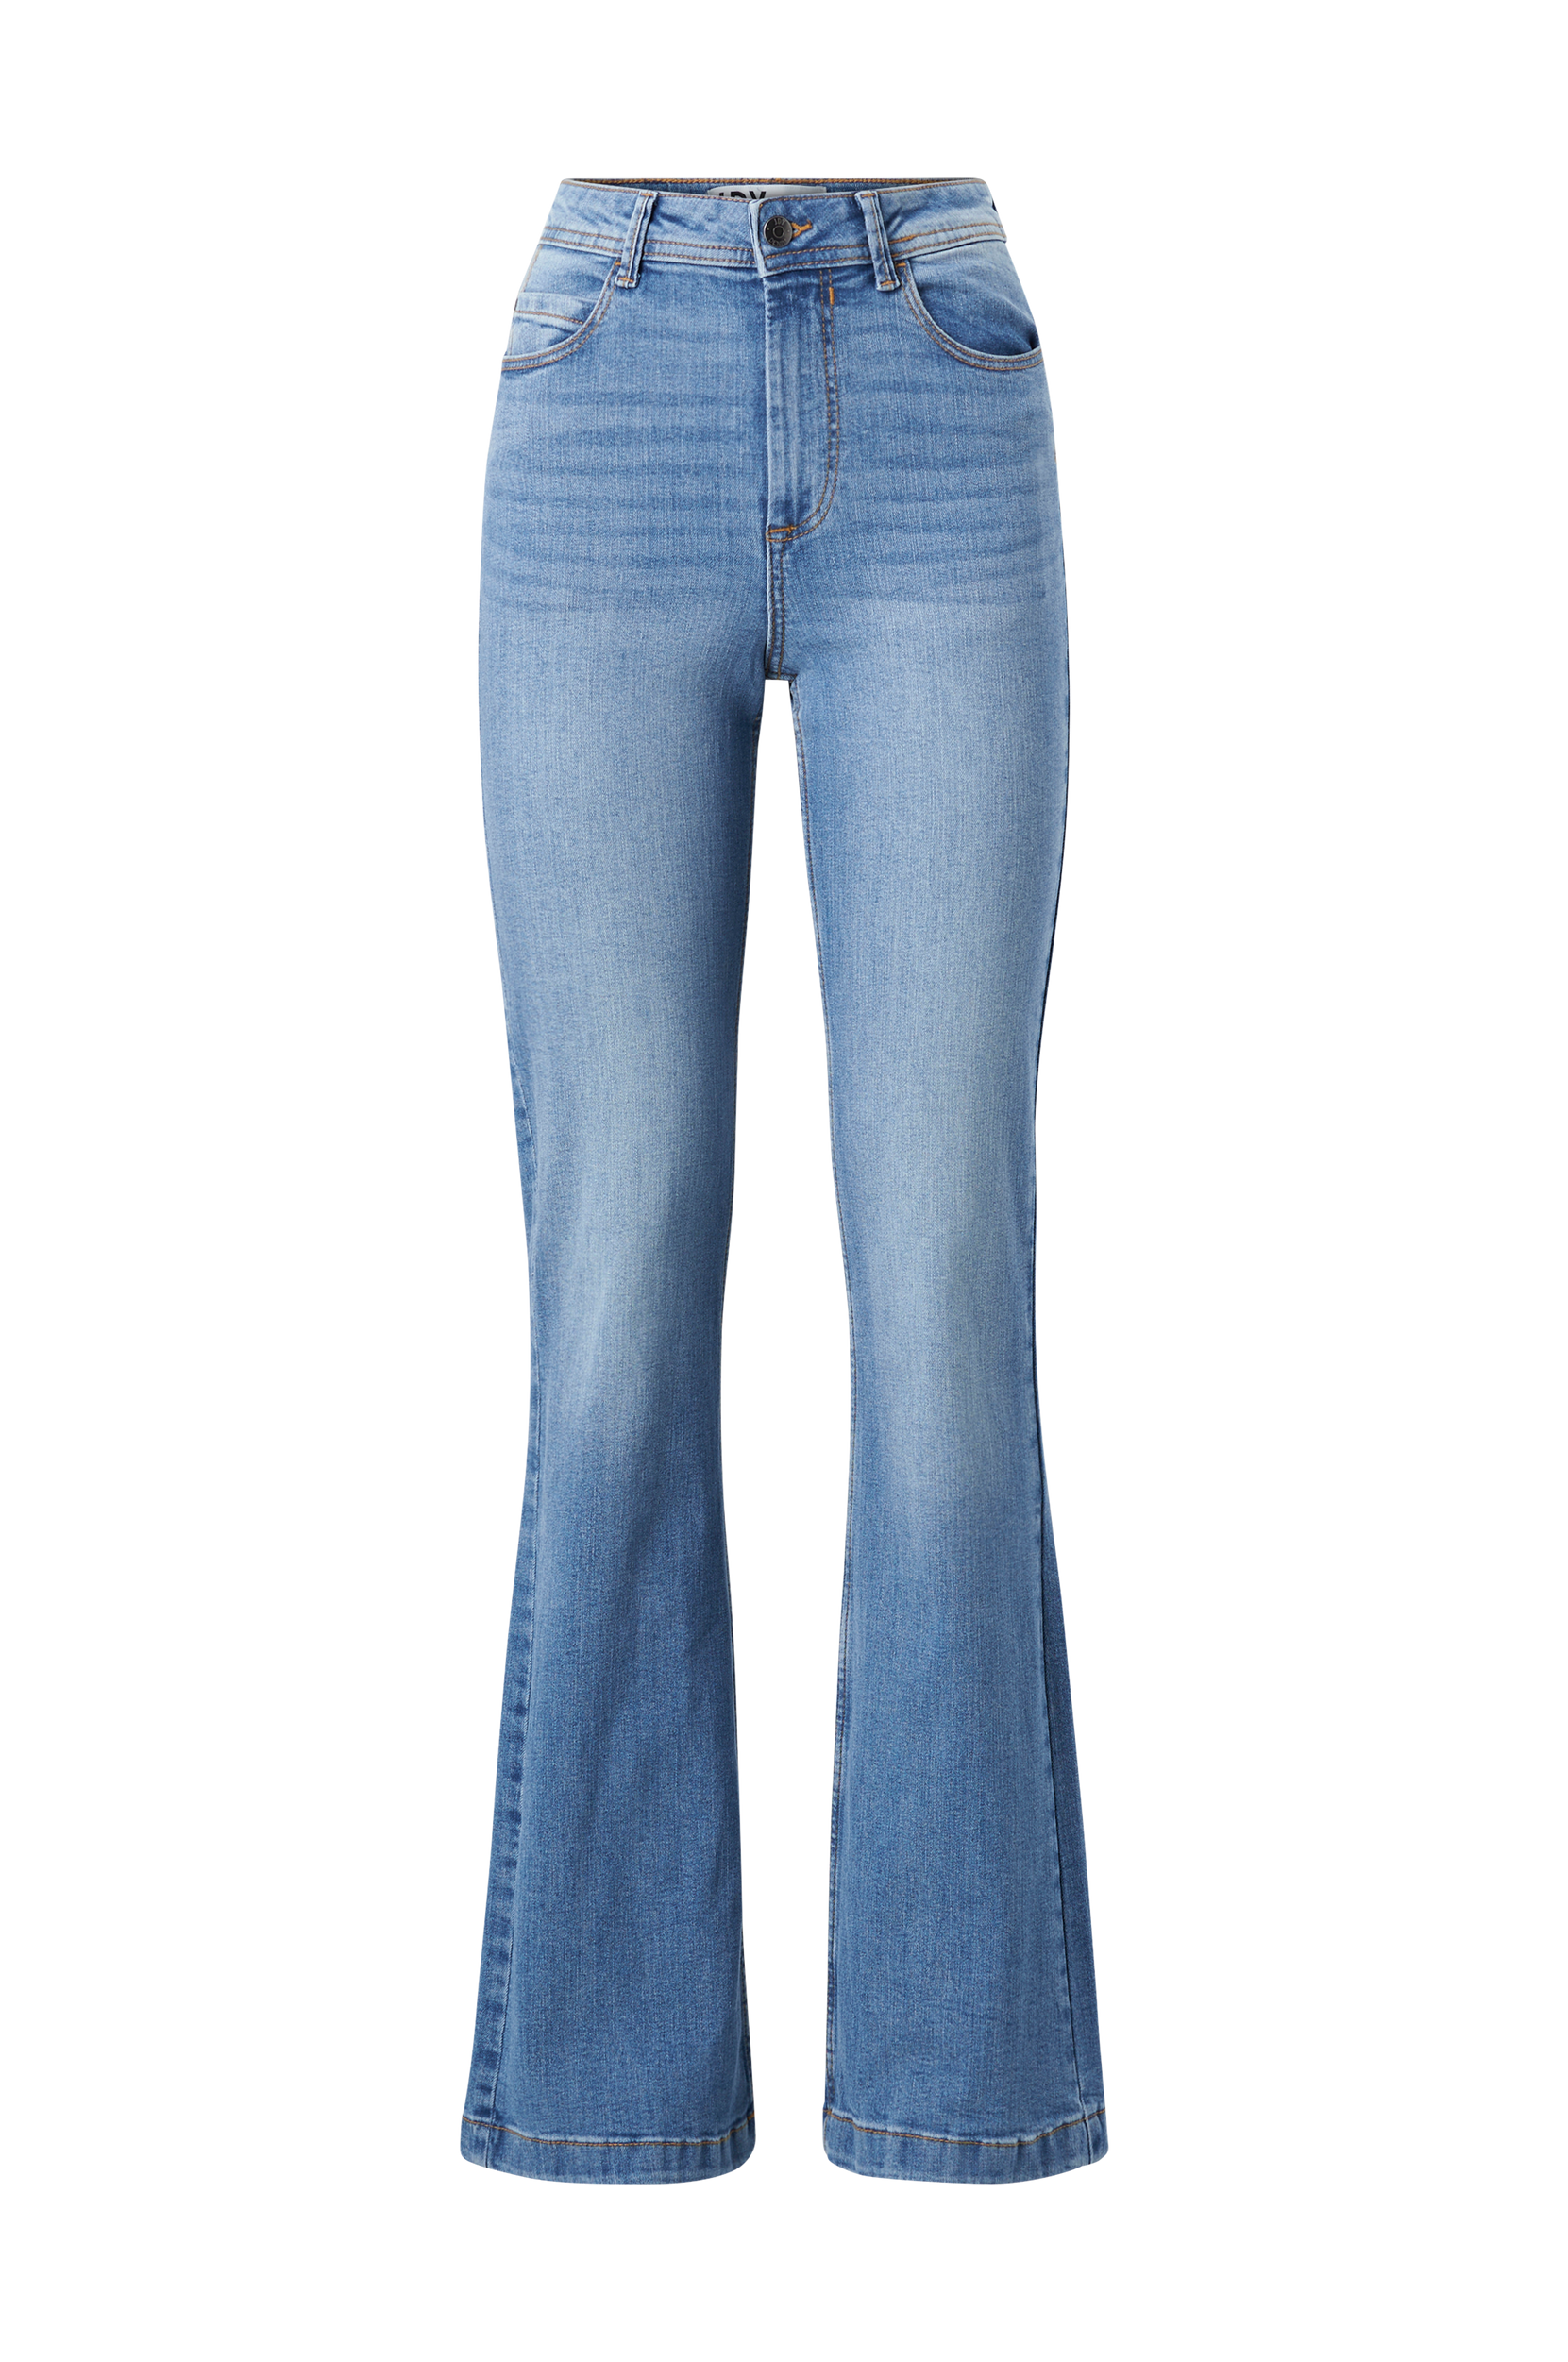 JDY - Jeans jdyFlora Flared High - Blå - W28/L32